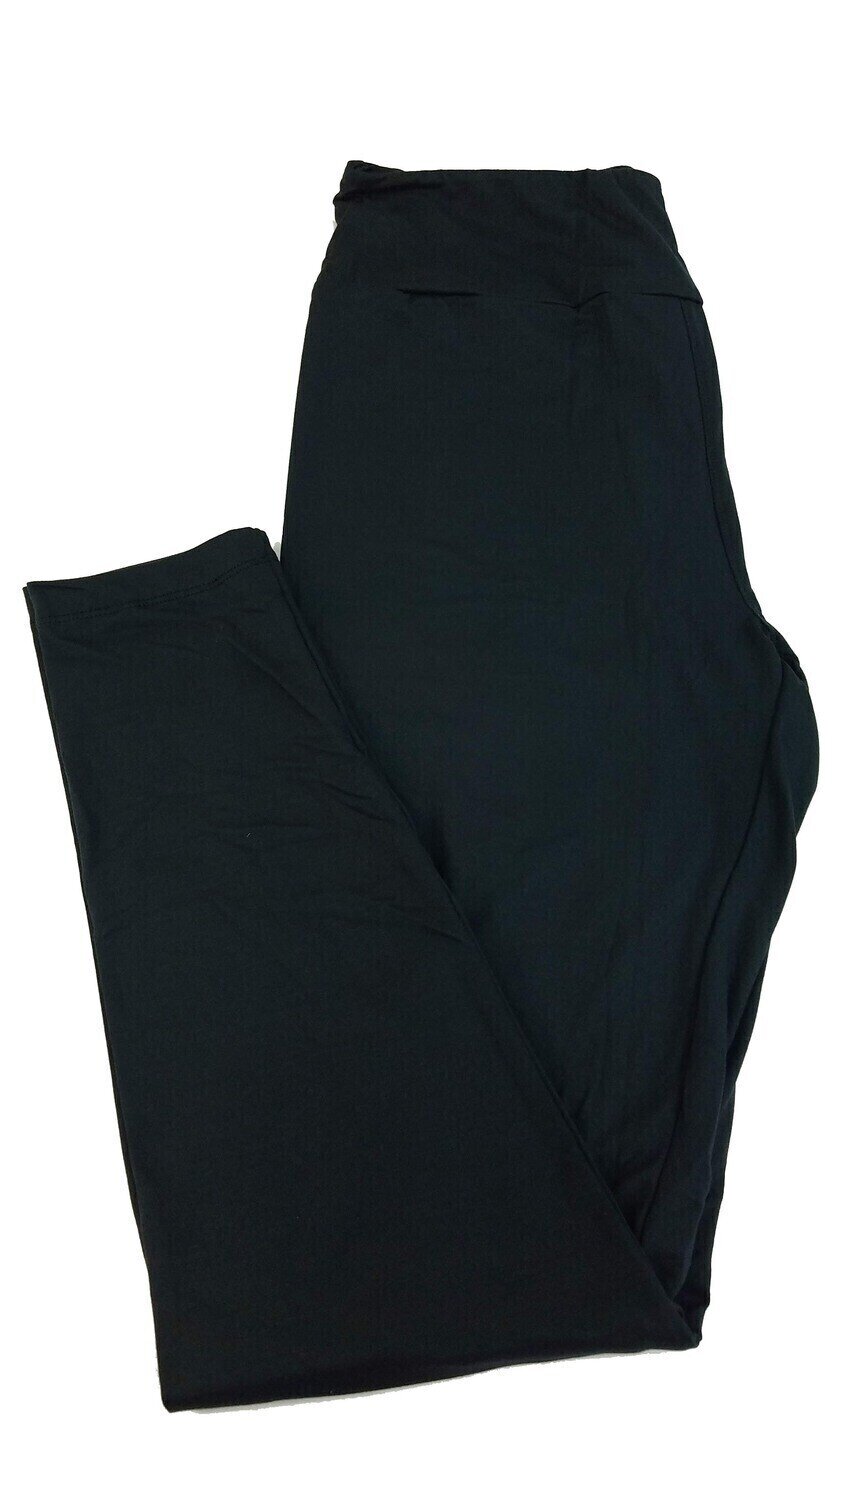 LuLaRoe Tween Solid Black Womens Leggings fits Adult Adult sizes 00-0